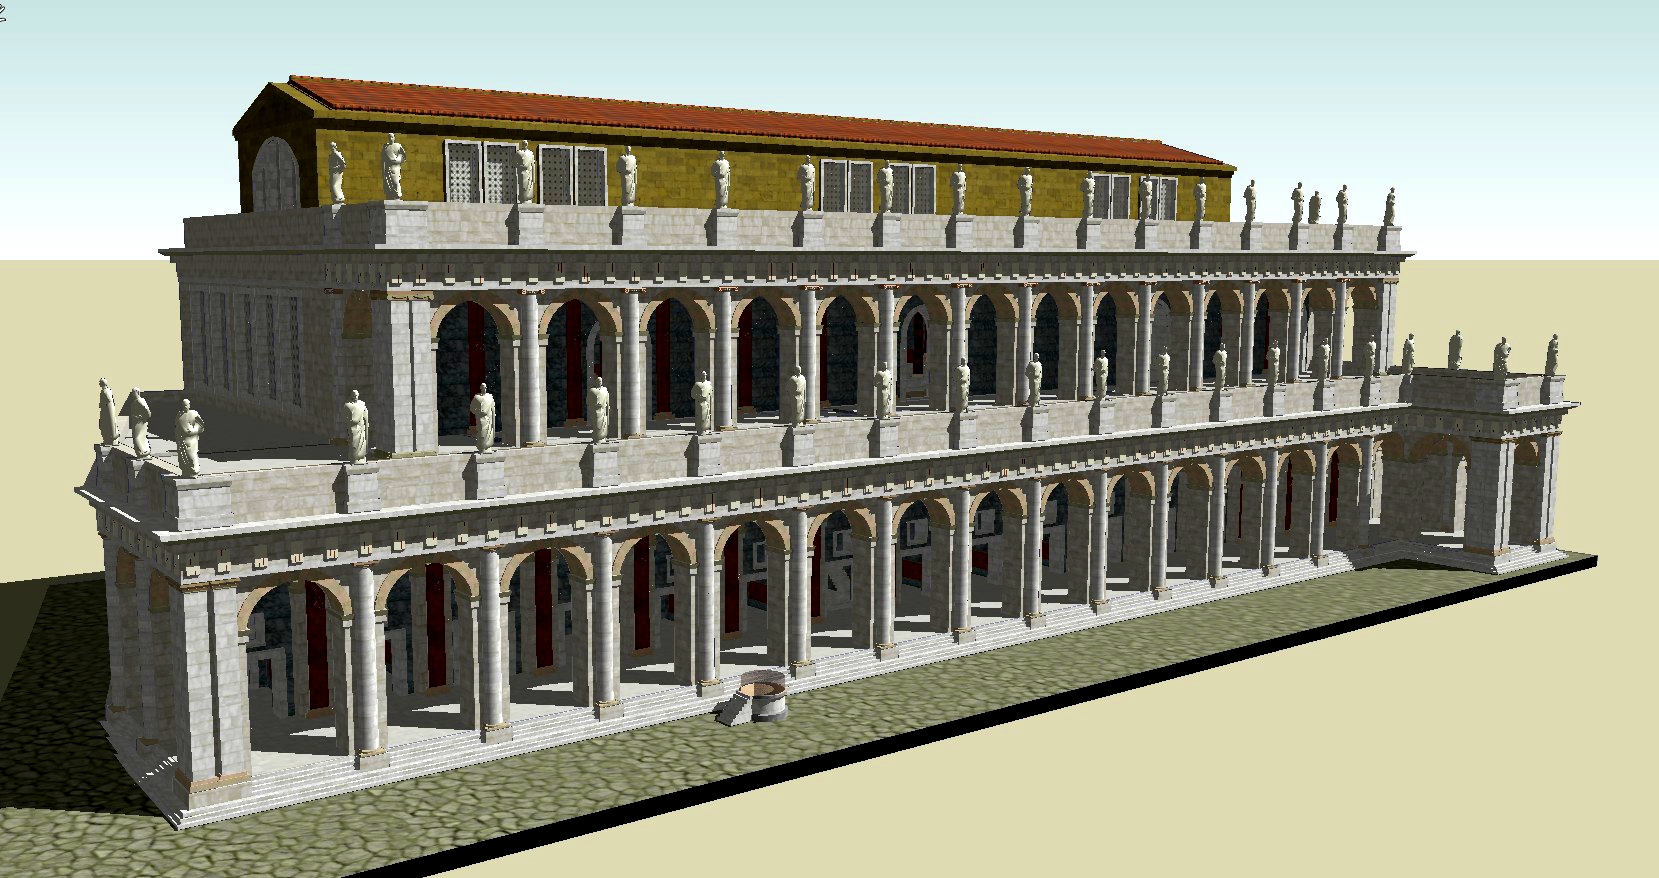 3D Model of the Basilica Aemilia